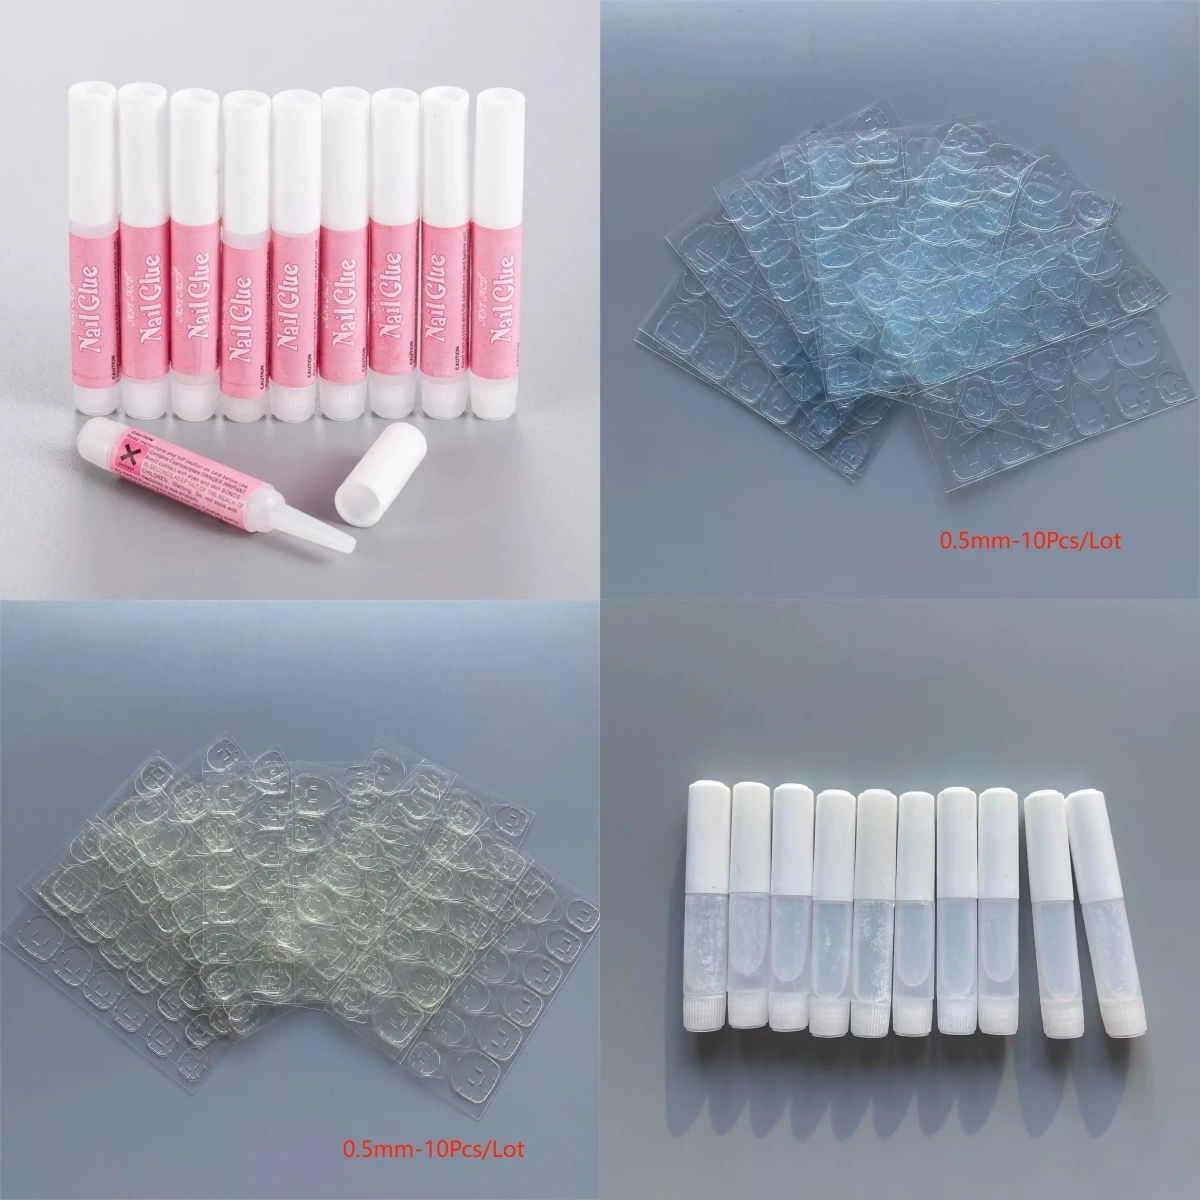 

10Pcs/Bag Mini False Nails Glue Decorate Tips Acrylic Glue on Nails Art Accessories Fake Nail Extension Nail Glue 2g Gel Glues